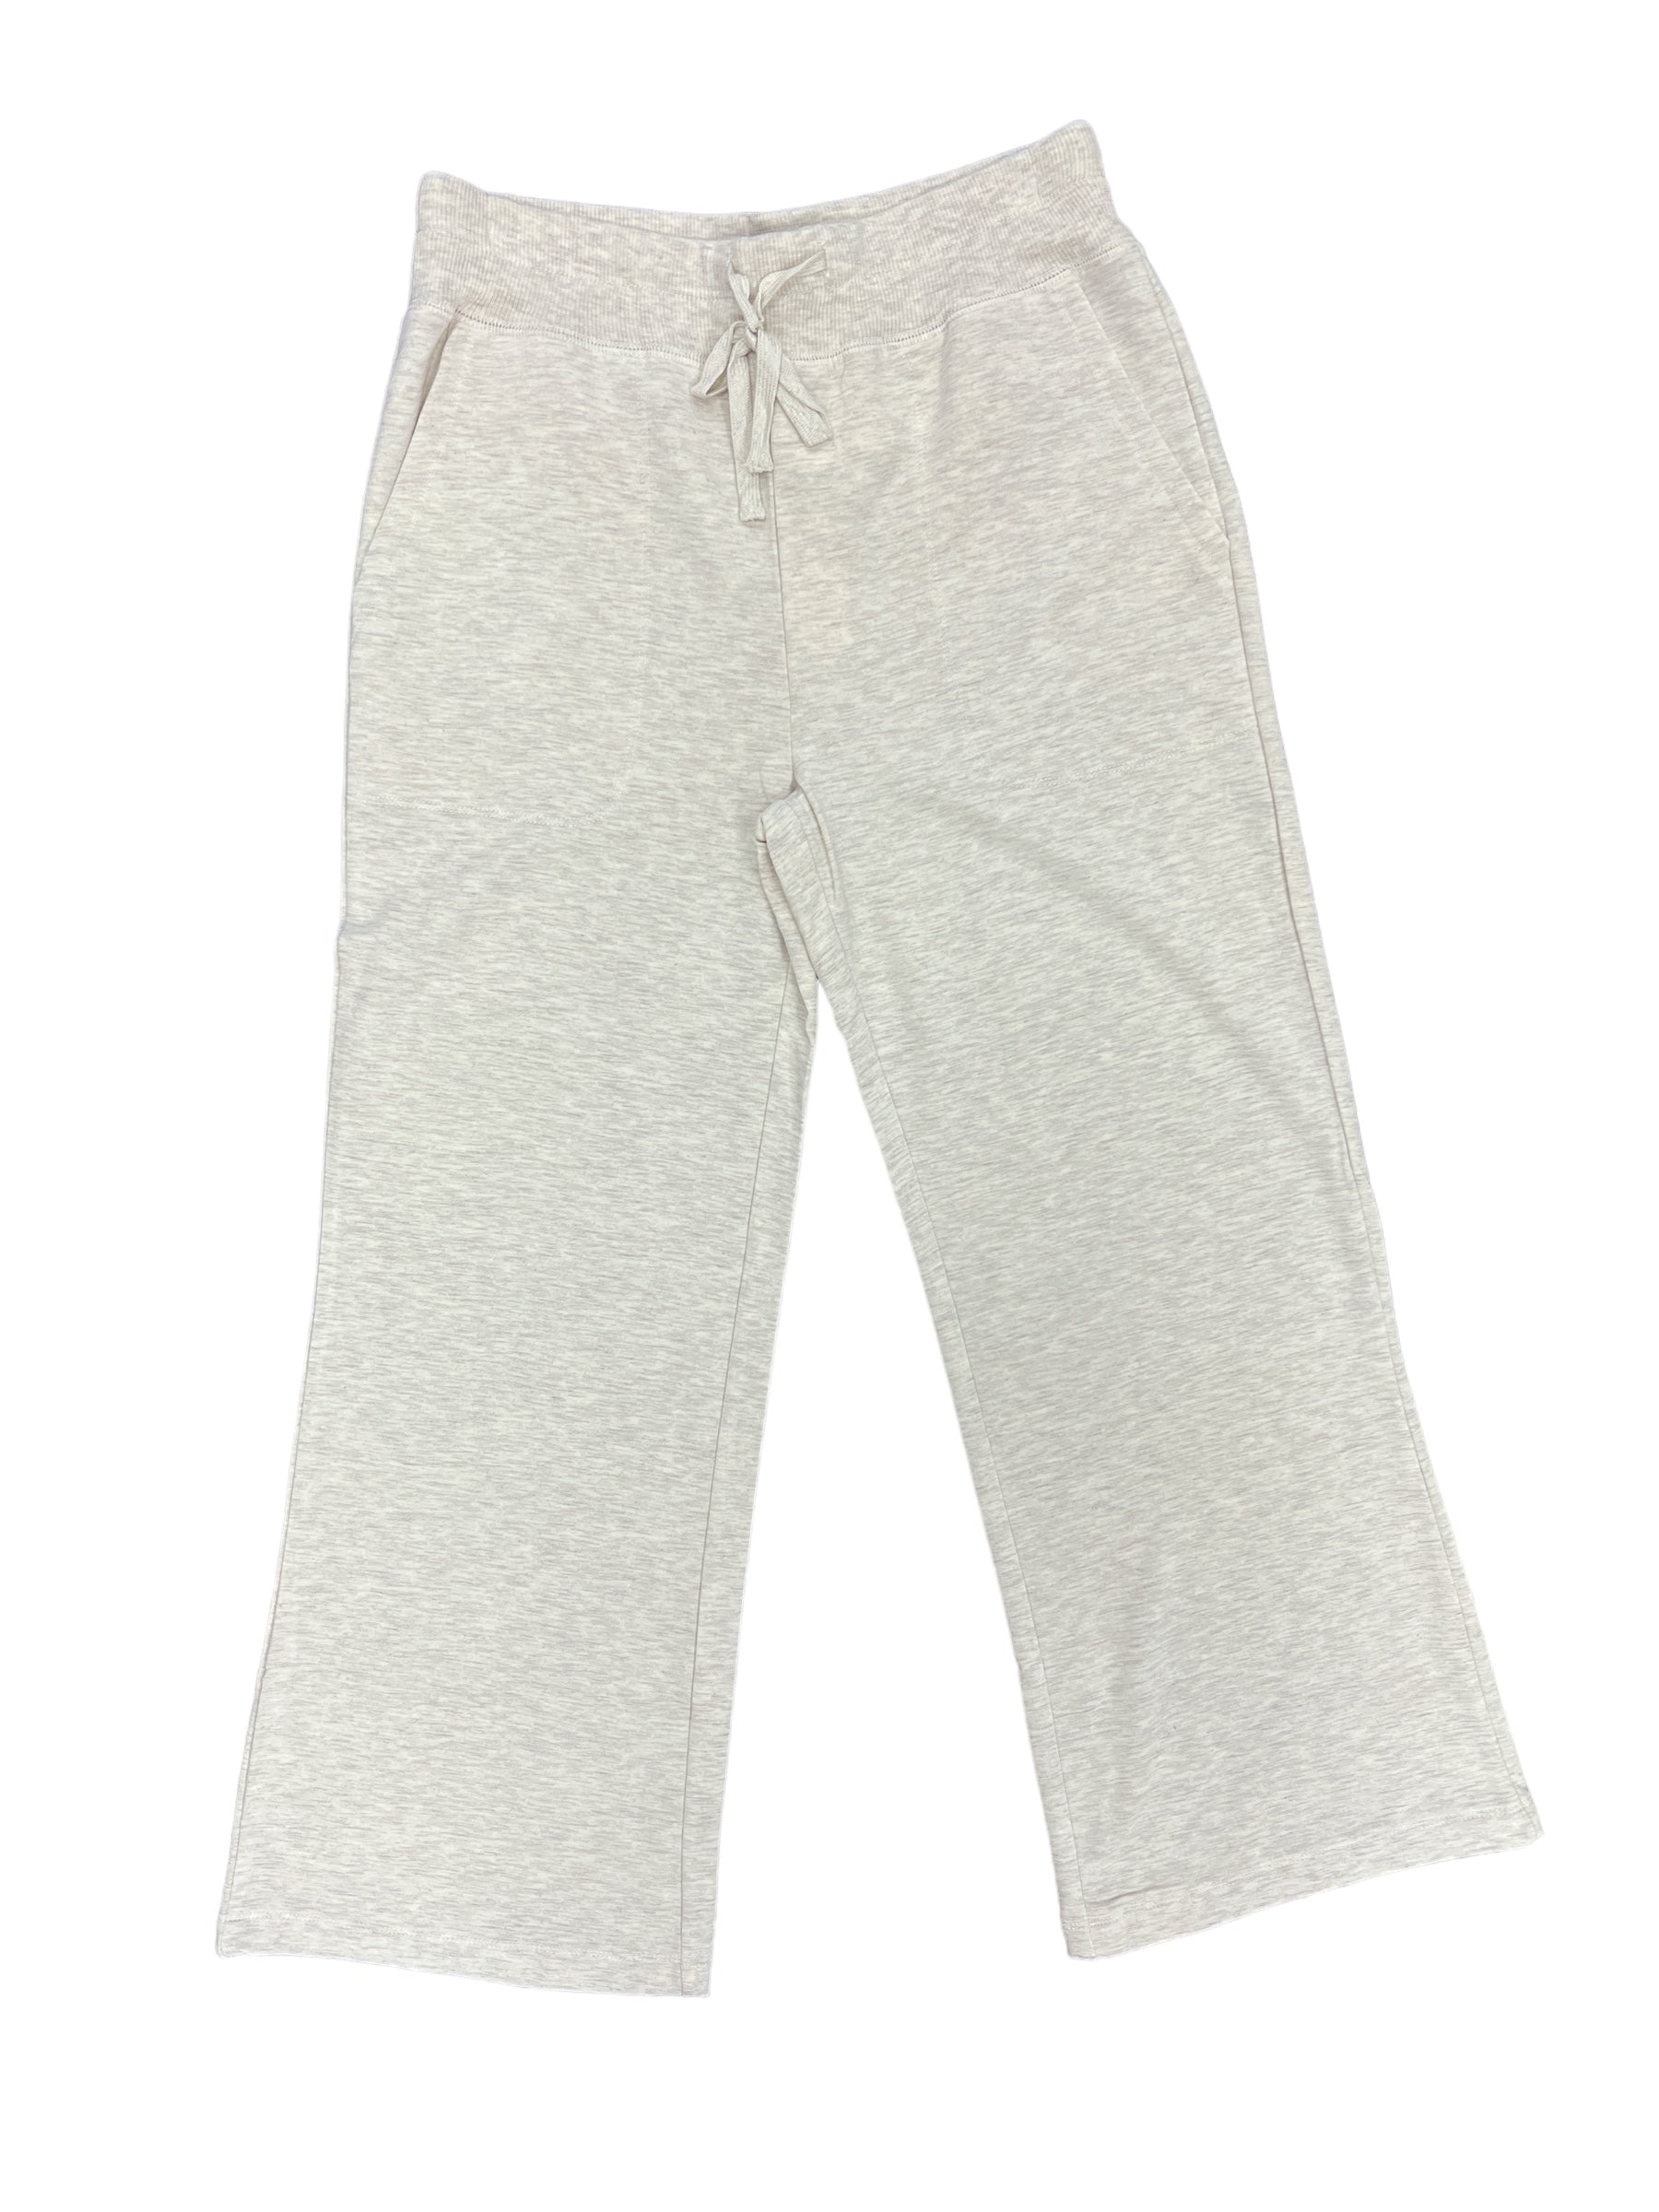 Jet Set Modal Pant-230 Pants-Simply Stylish Boutique-Simply Stylish Boutique | Women’s & Kid’s Fashion | Paducah, KY